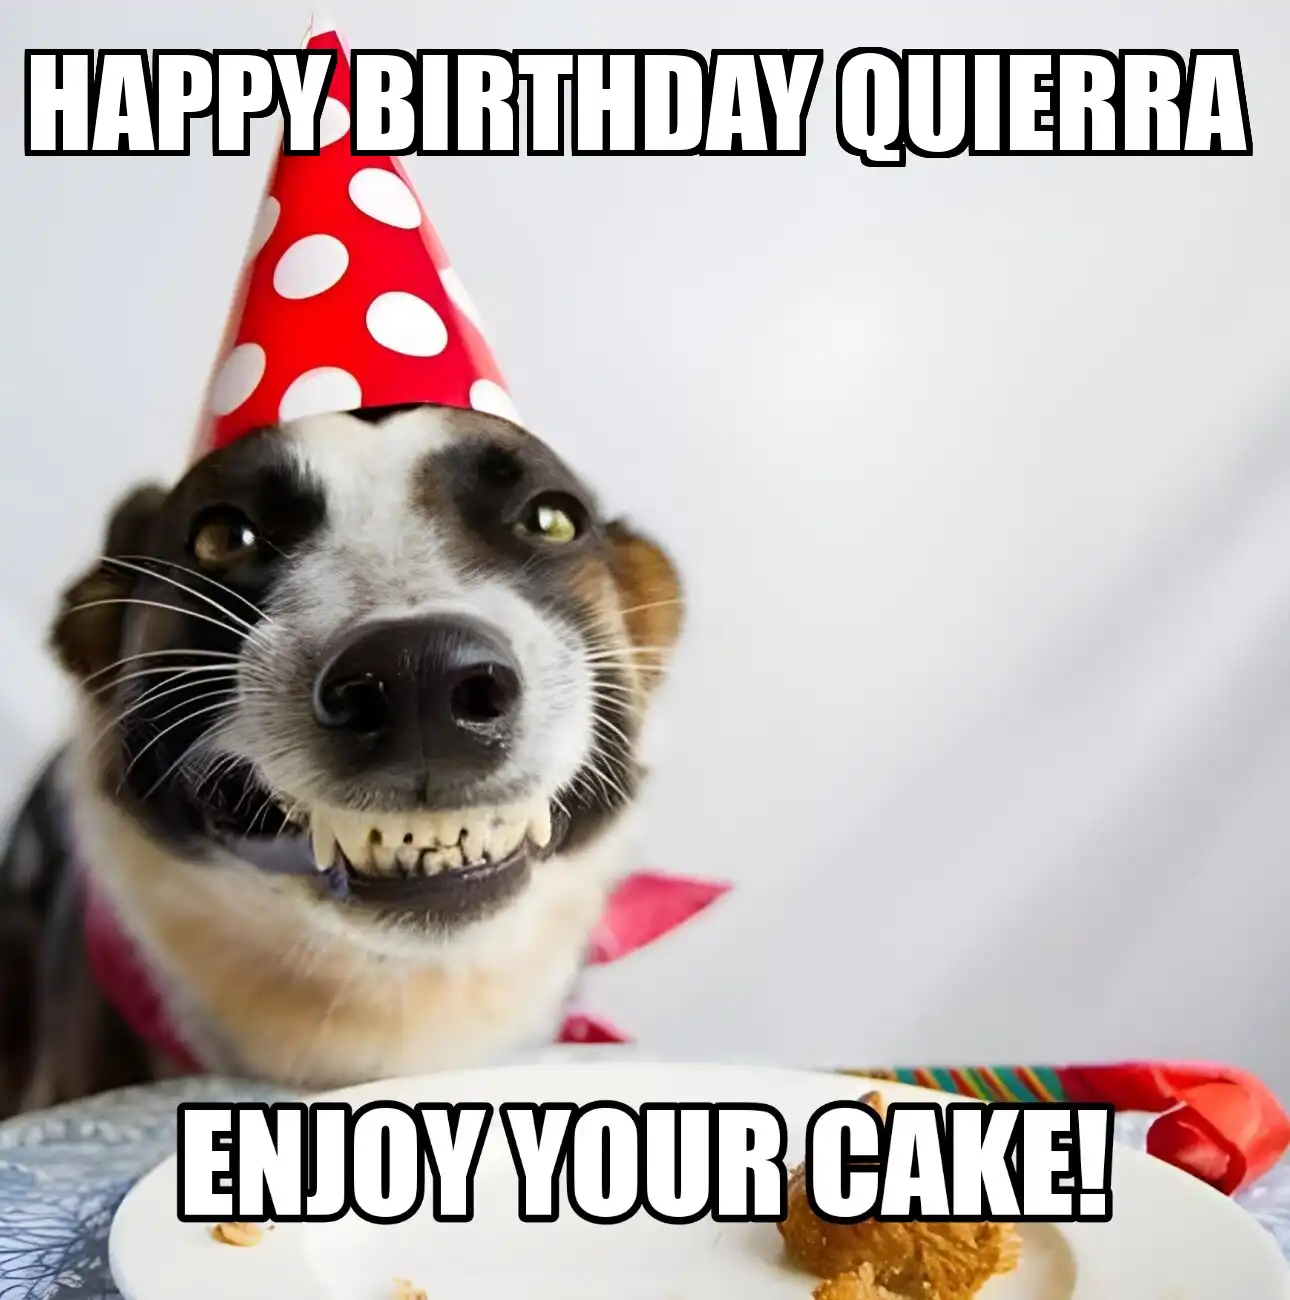 Happy Birthday Quierra Enjoy Your Cake Dog Meme